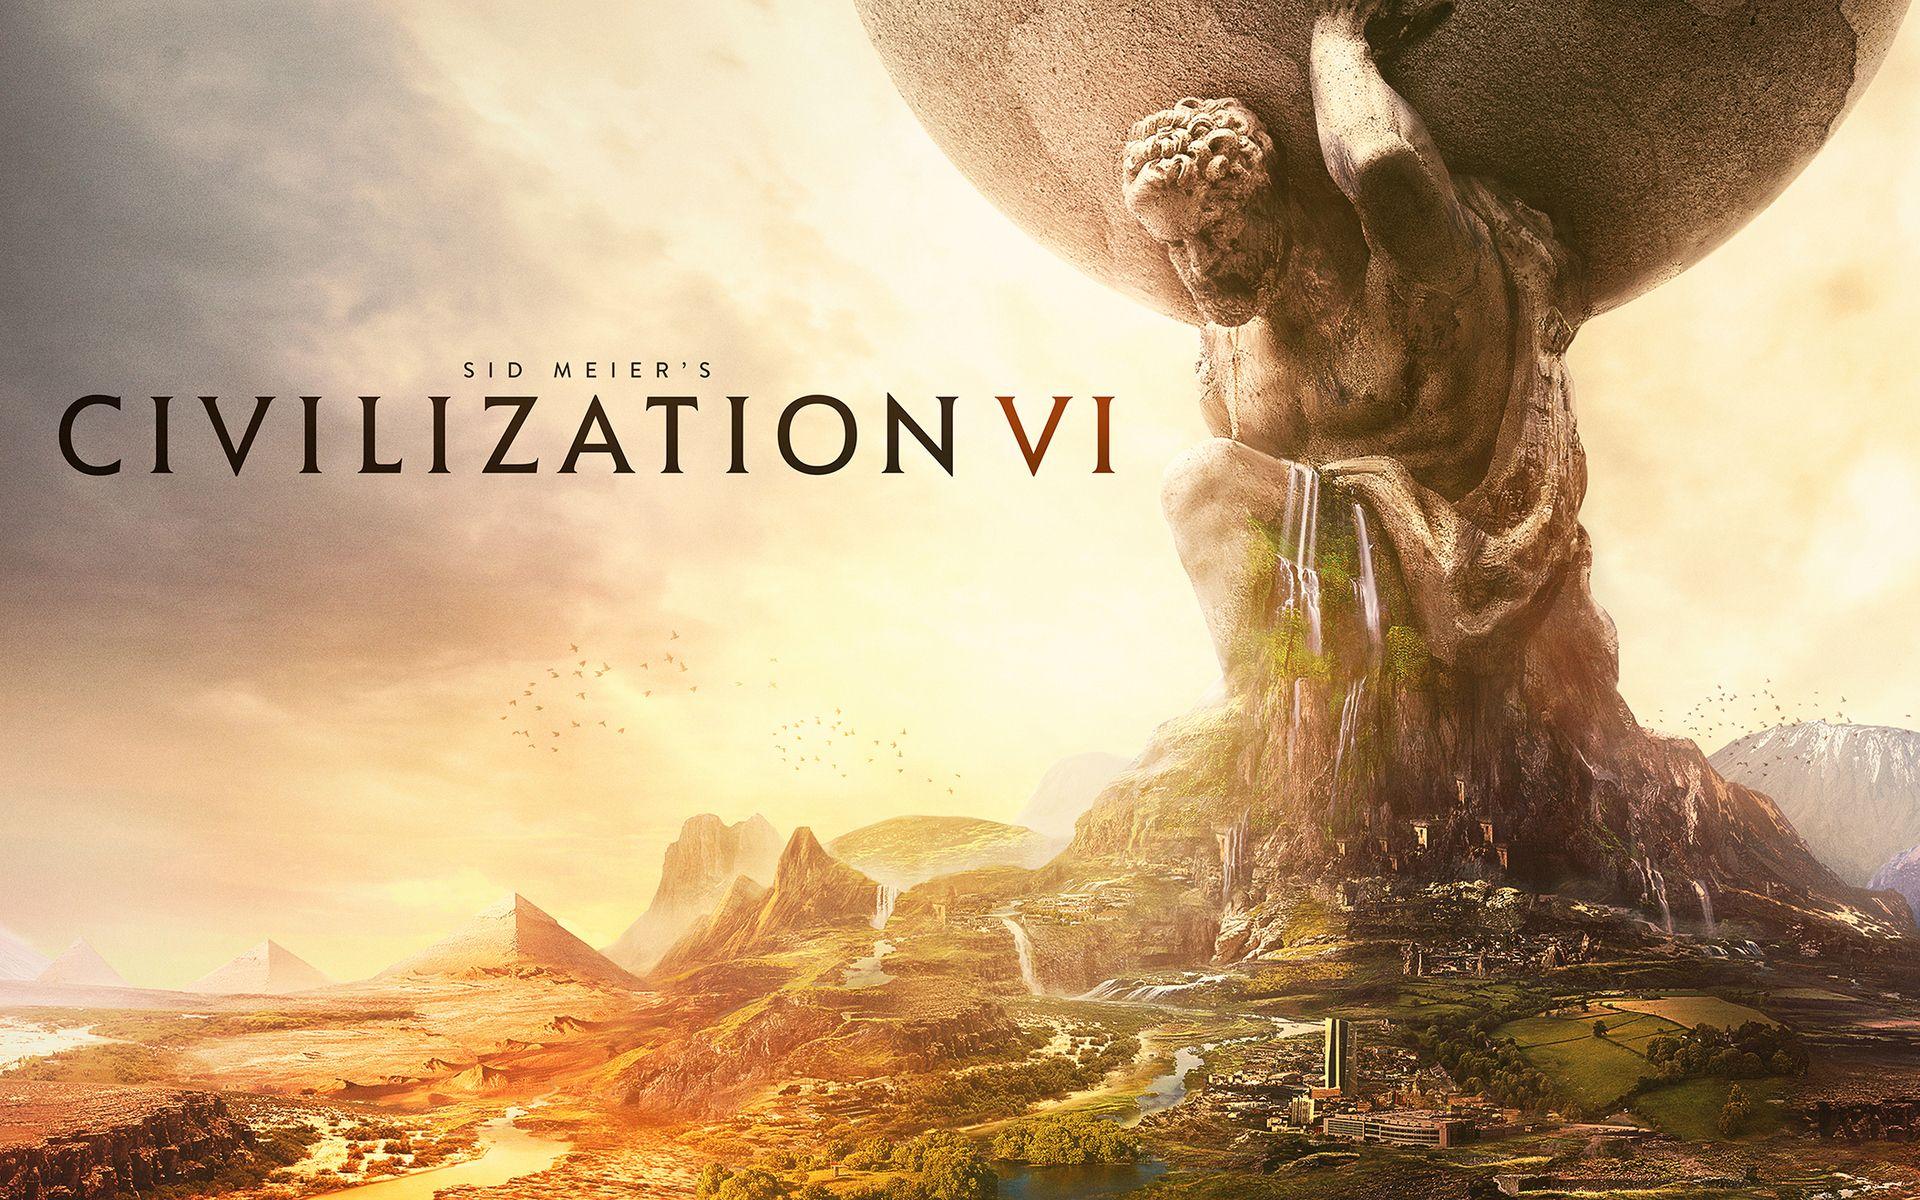 Sid Meier's Civilization VI Wallpaper Image Photo Picture